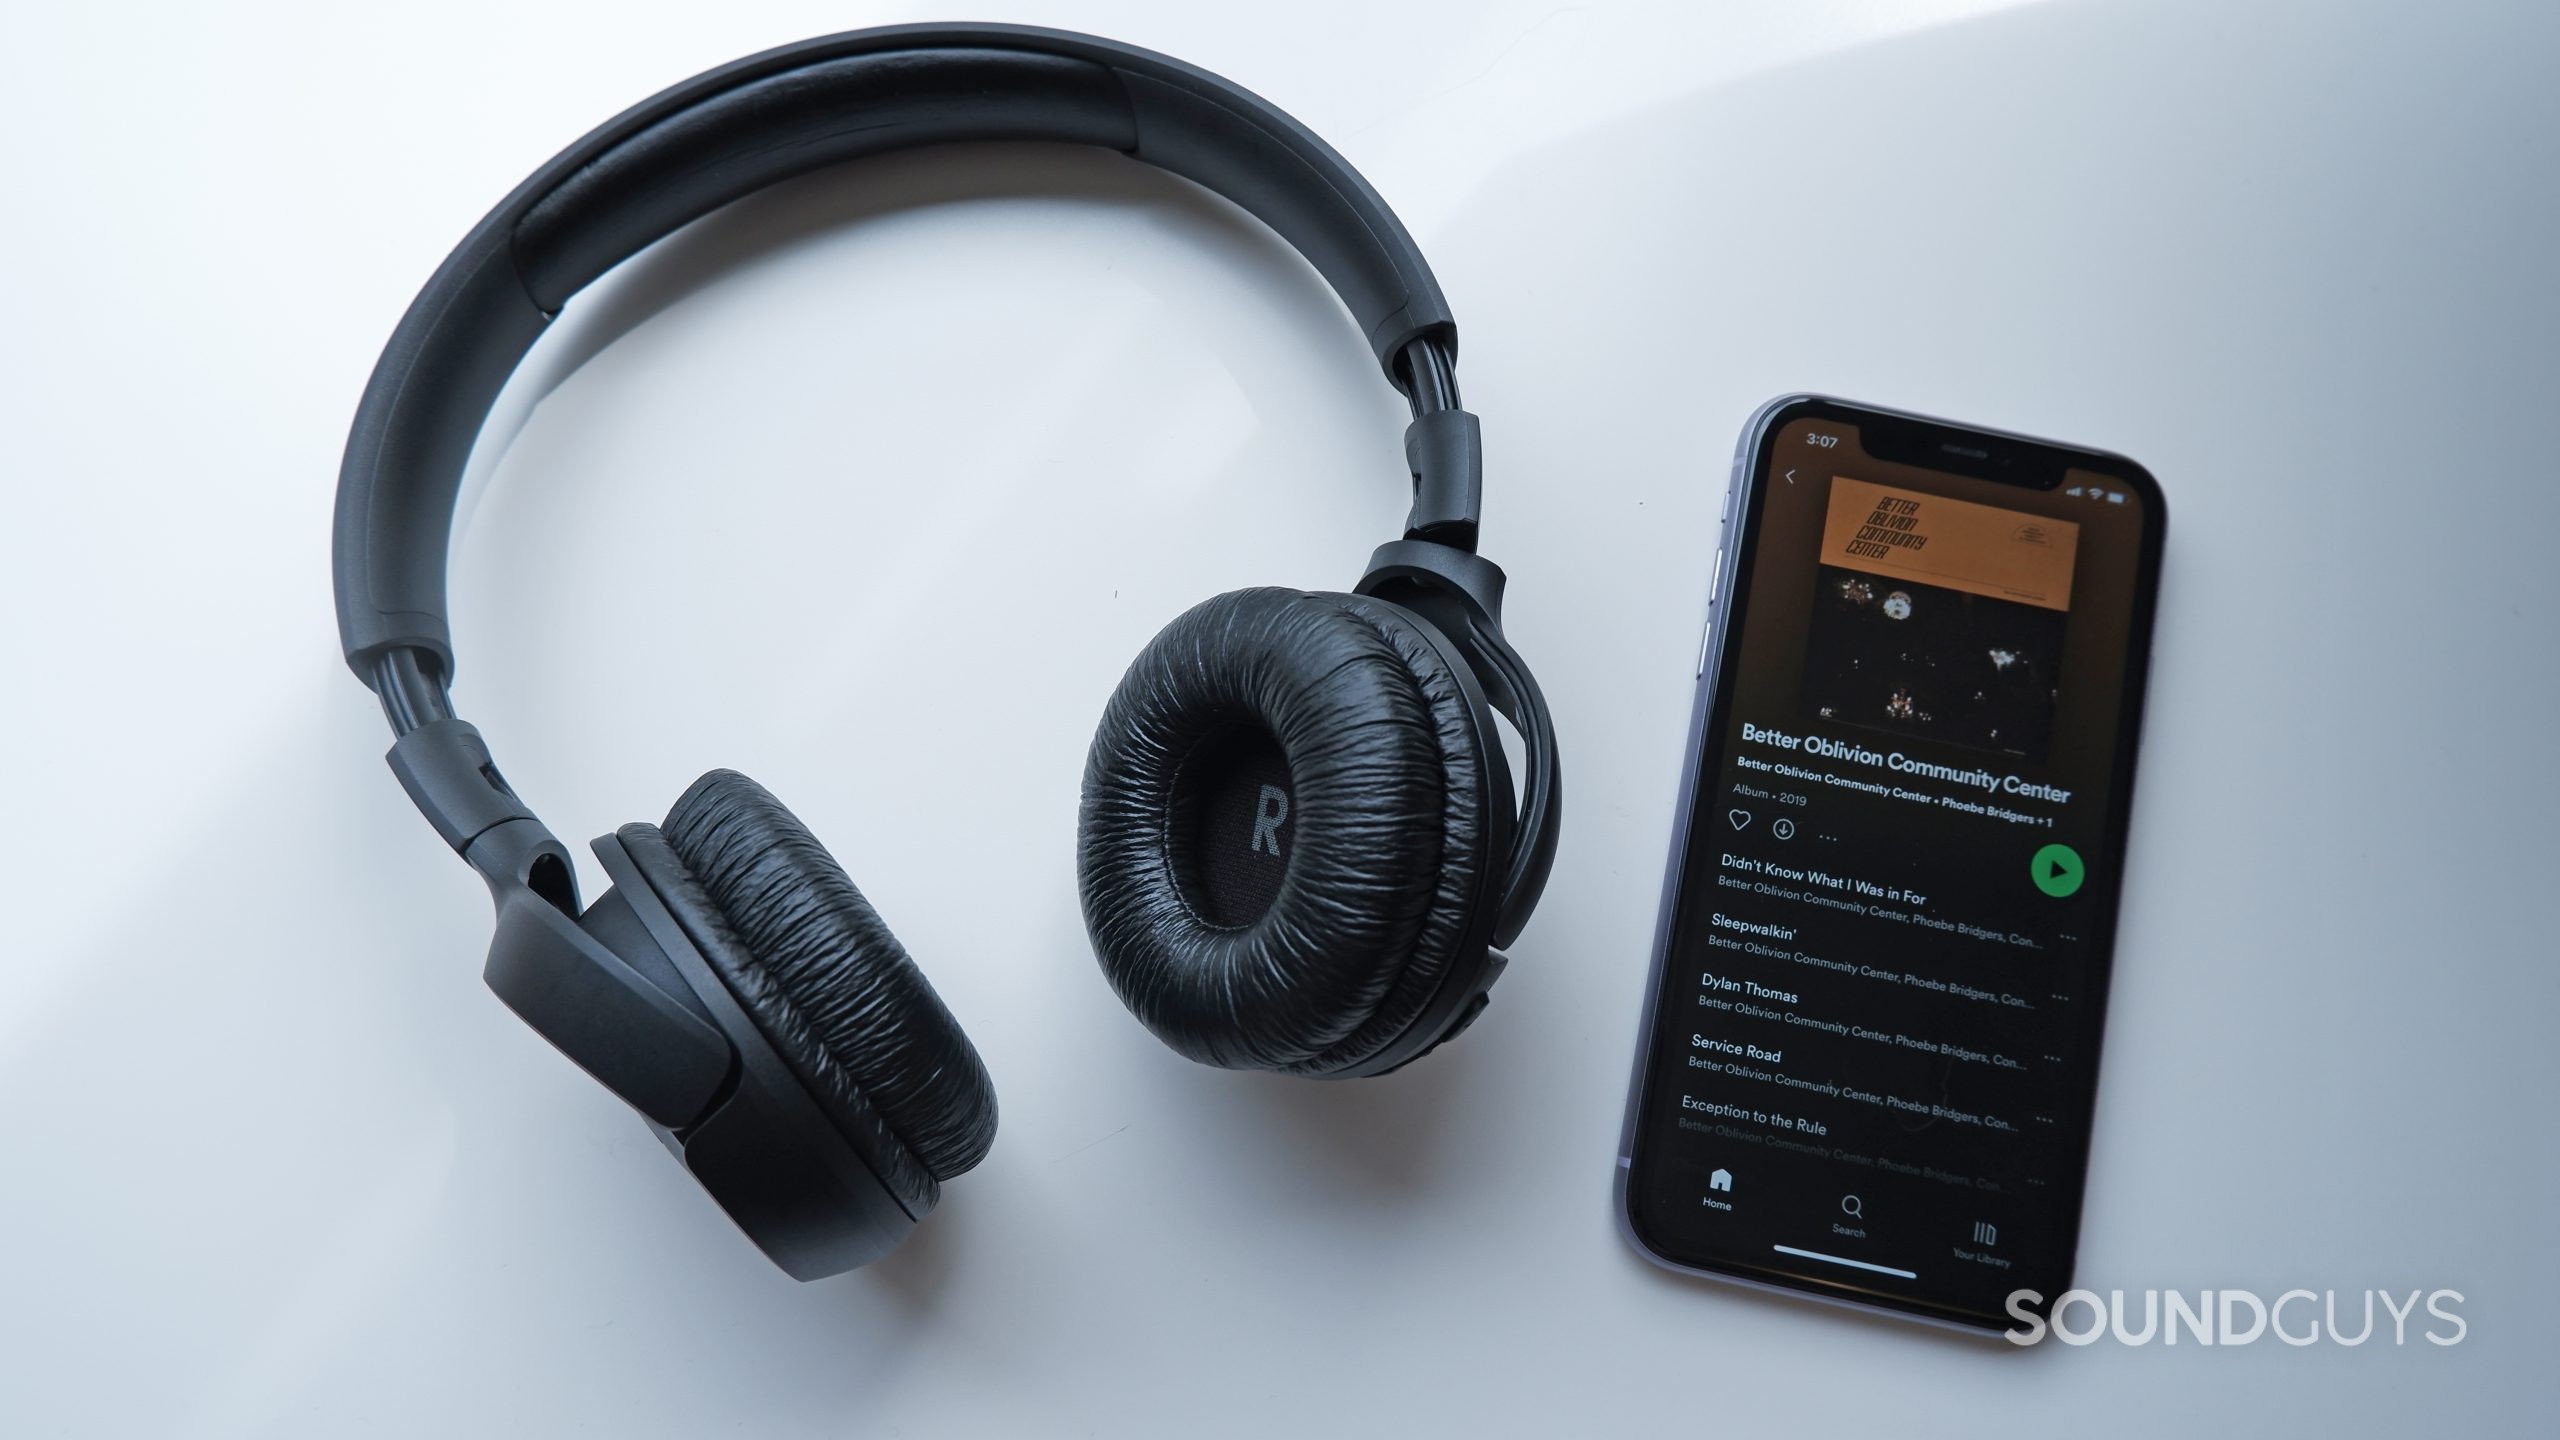 JBL Tune 510BT Lifestyle Bluetooth on Ear Headphones - Black - 13988  requests